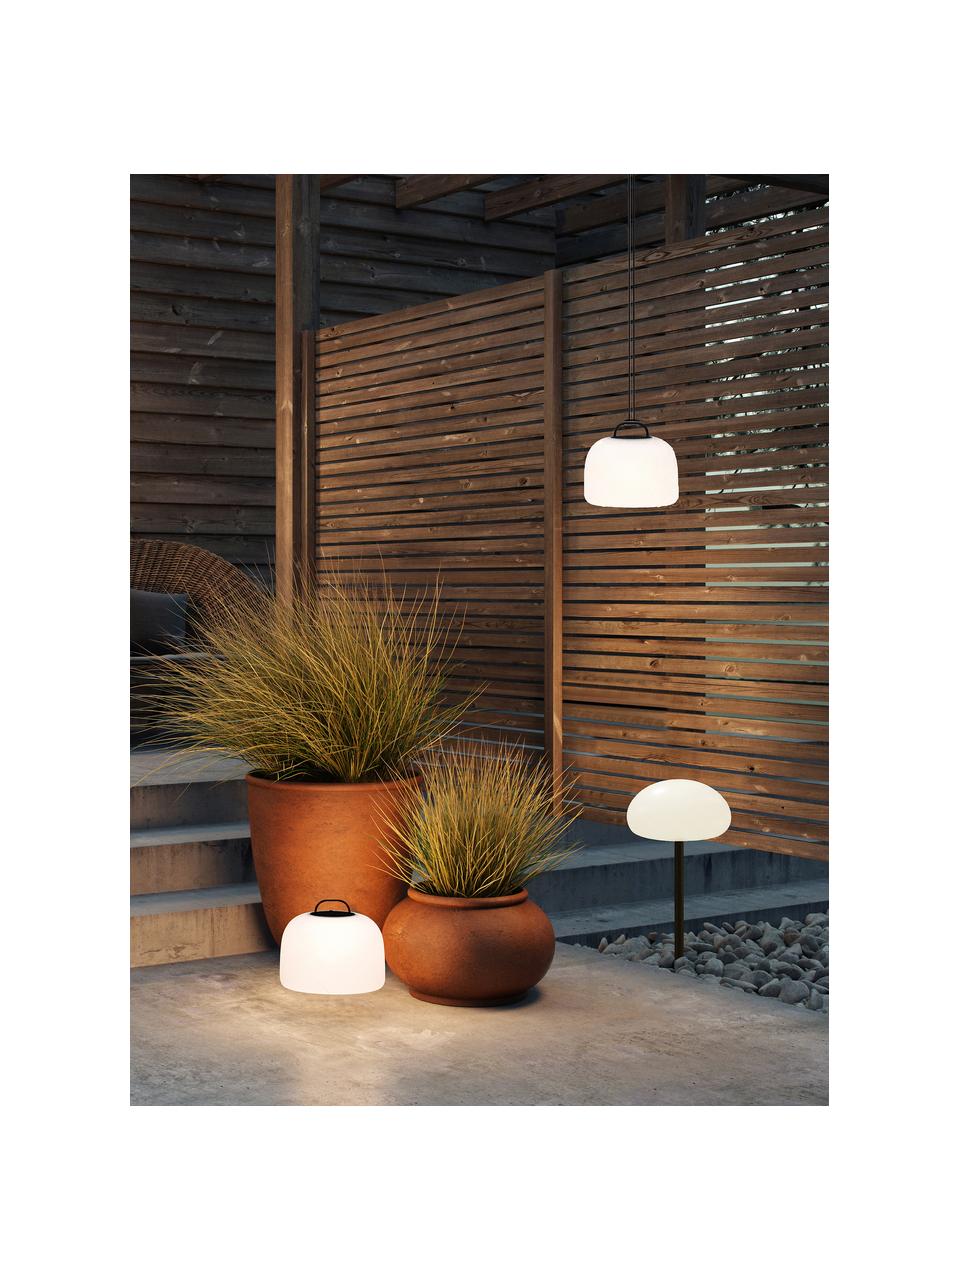 Mobile Outdoor LED-Pendelleuchte Kettle, dimmbar, Cremeweiss, Dunkelgrün, Ø 36 x H 31 cm